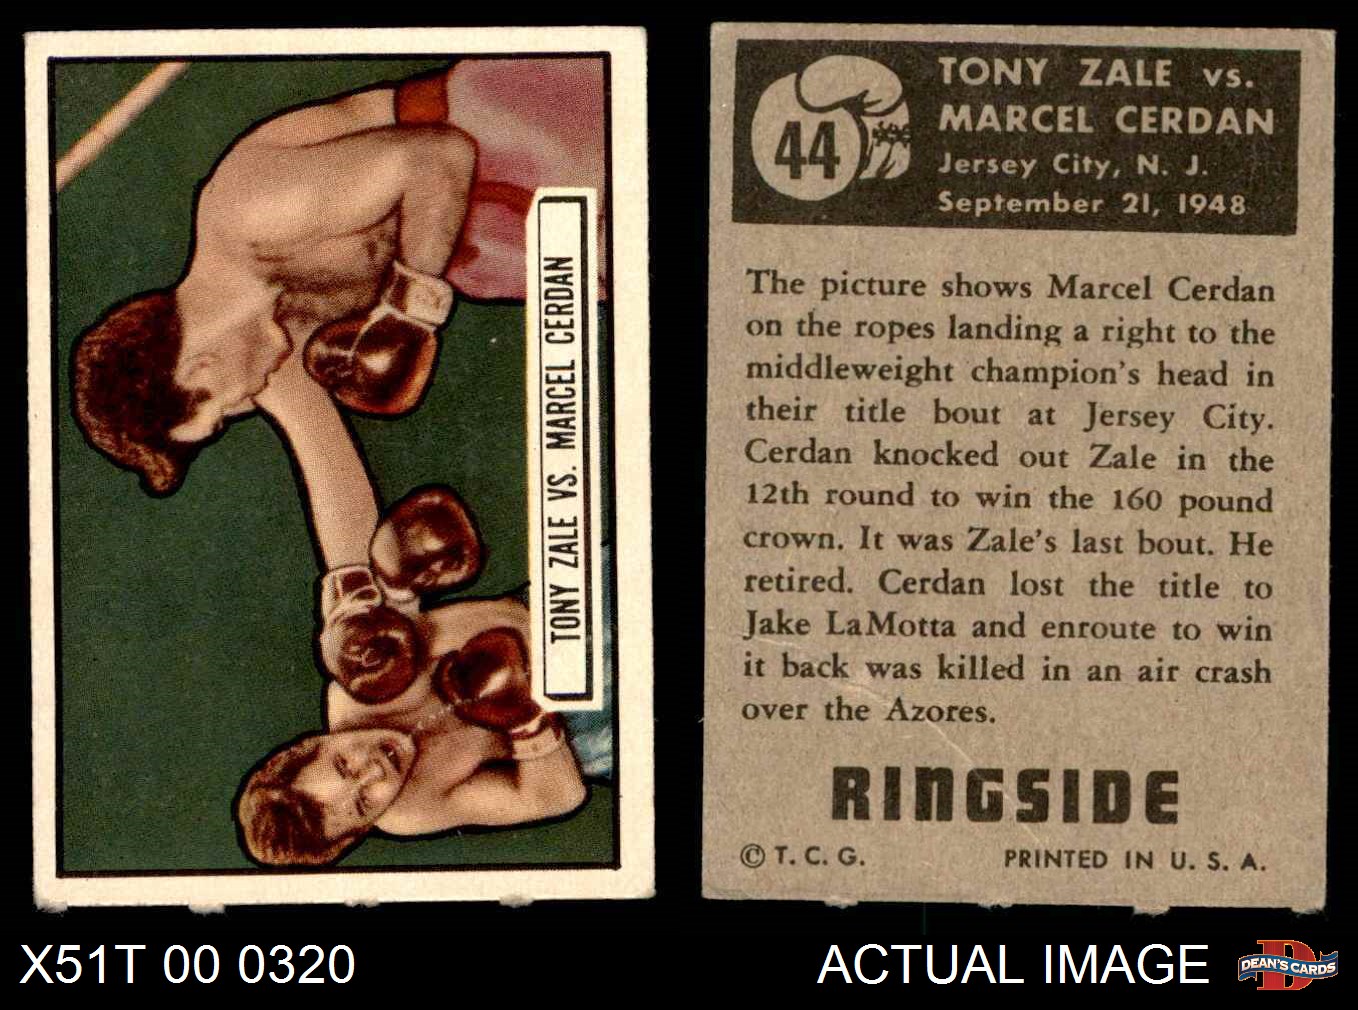 1951 Topps Ringside Tony Zale Marcel Cerdan #44 